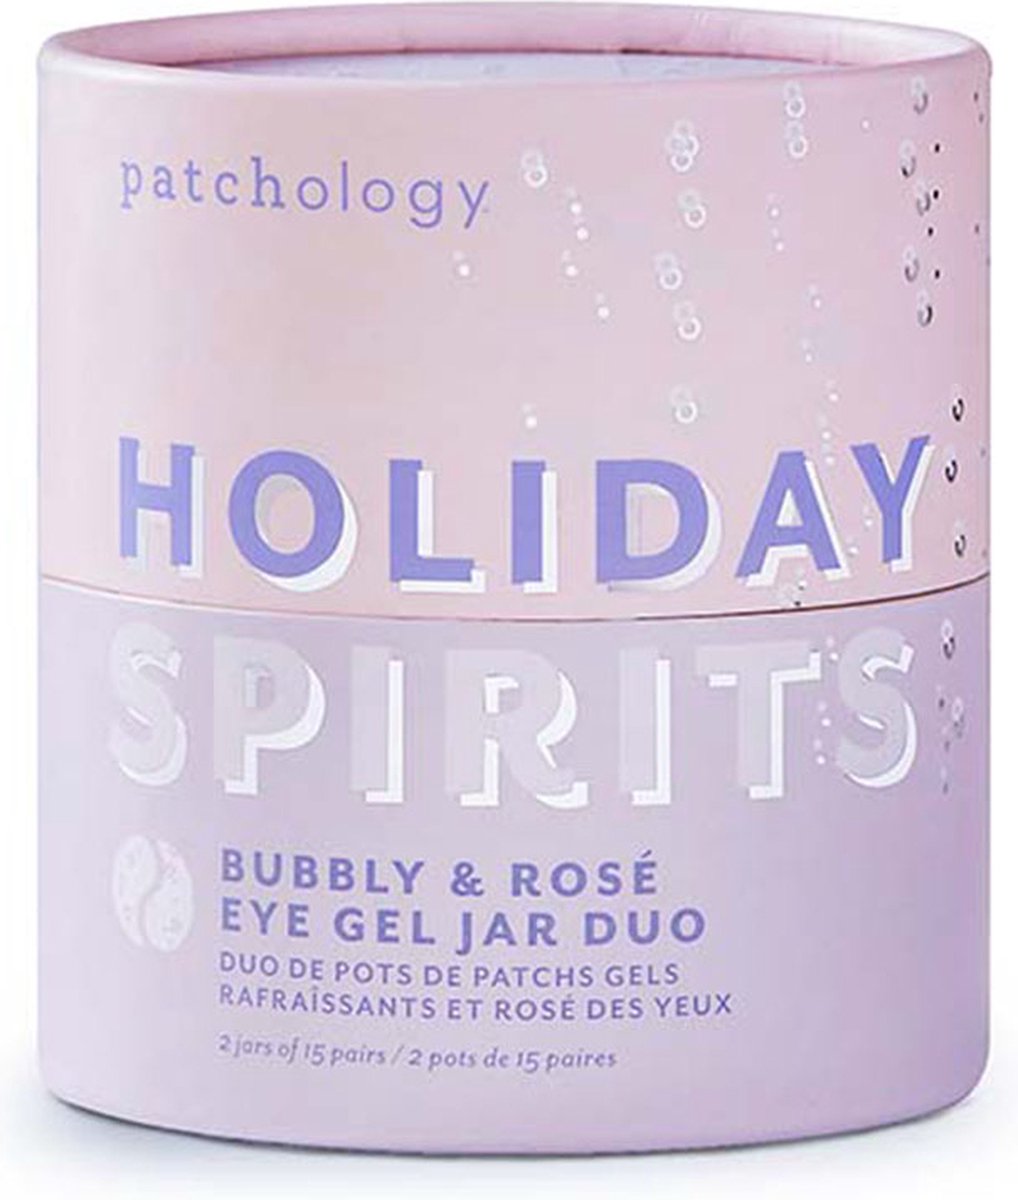 PATCHOLOGY - Holiday Spirits Giftset - 1 st - oogmasker